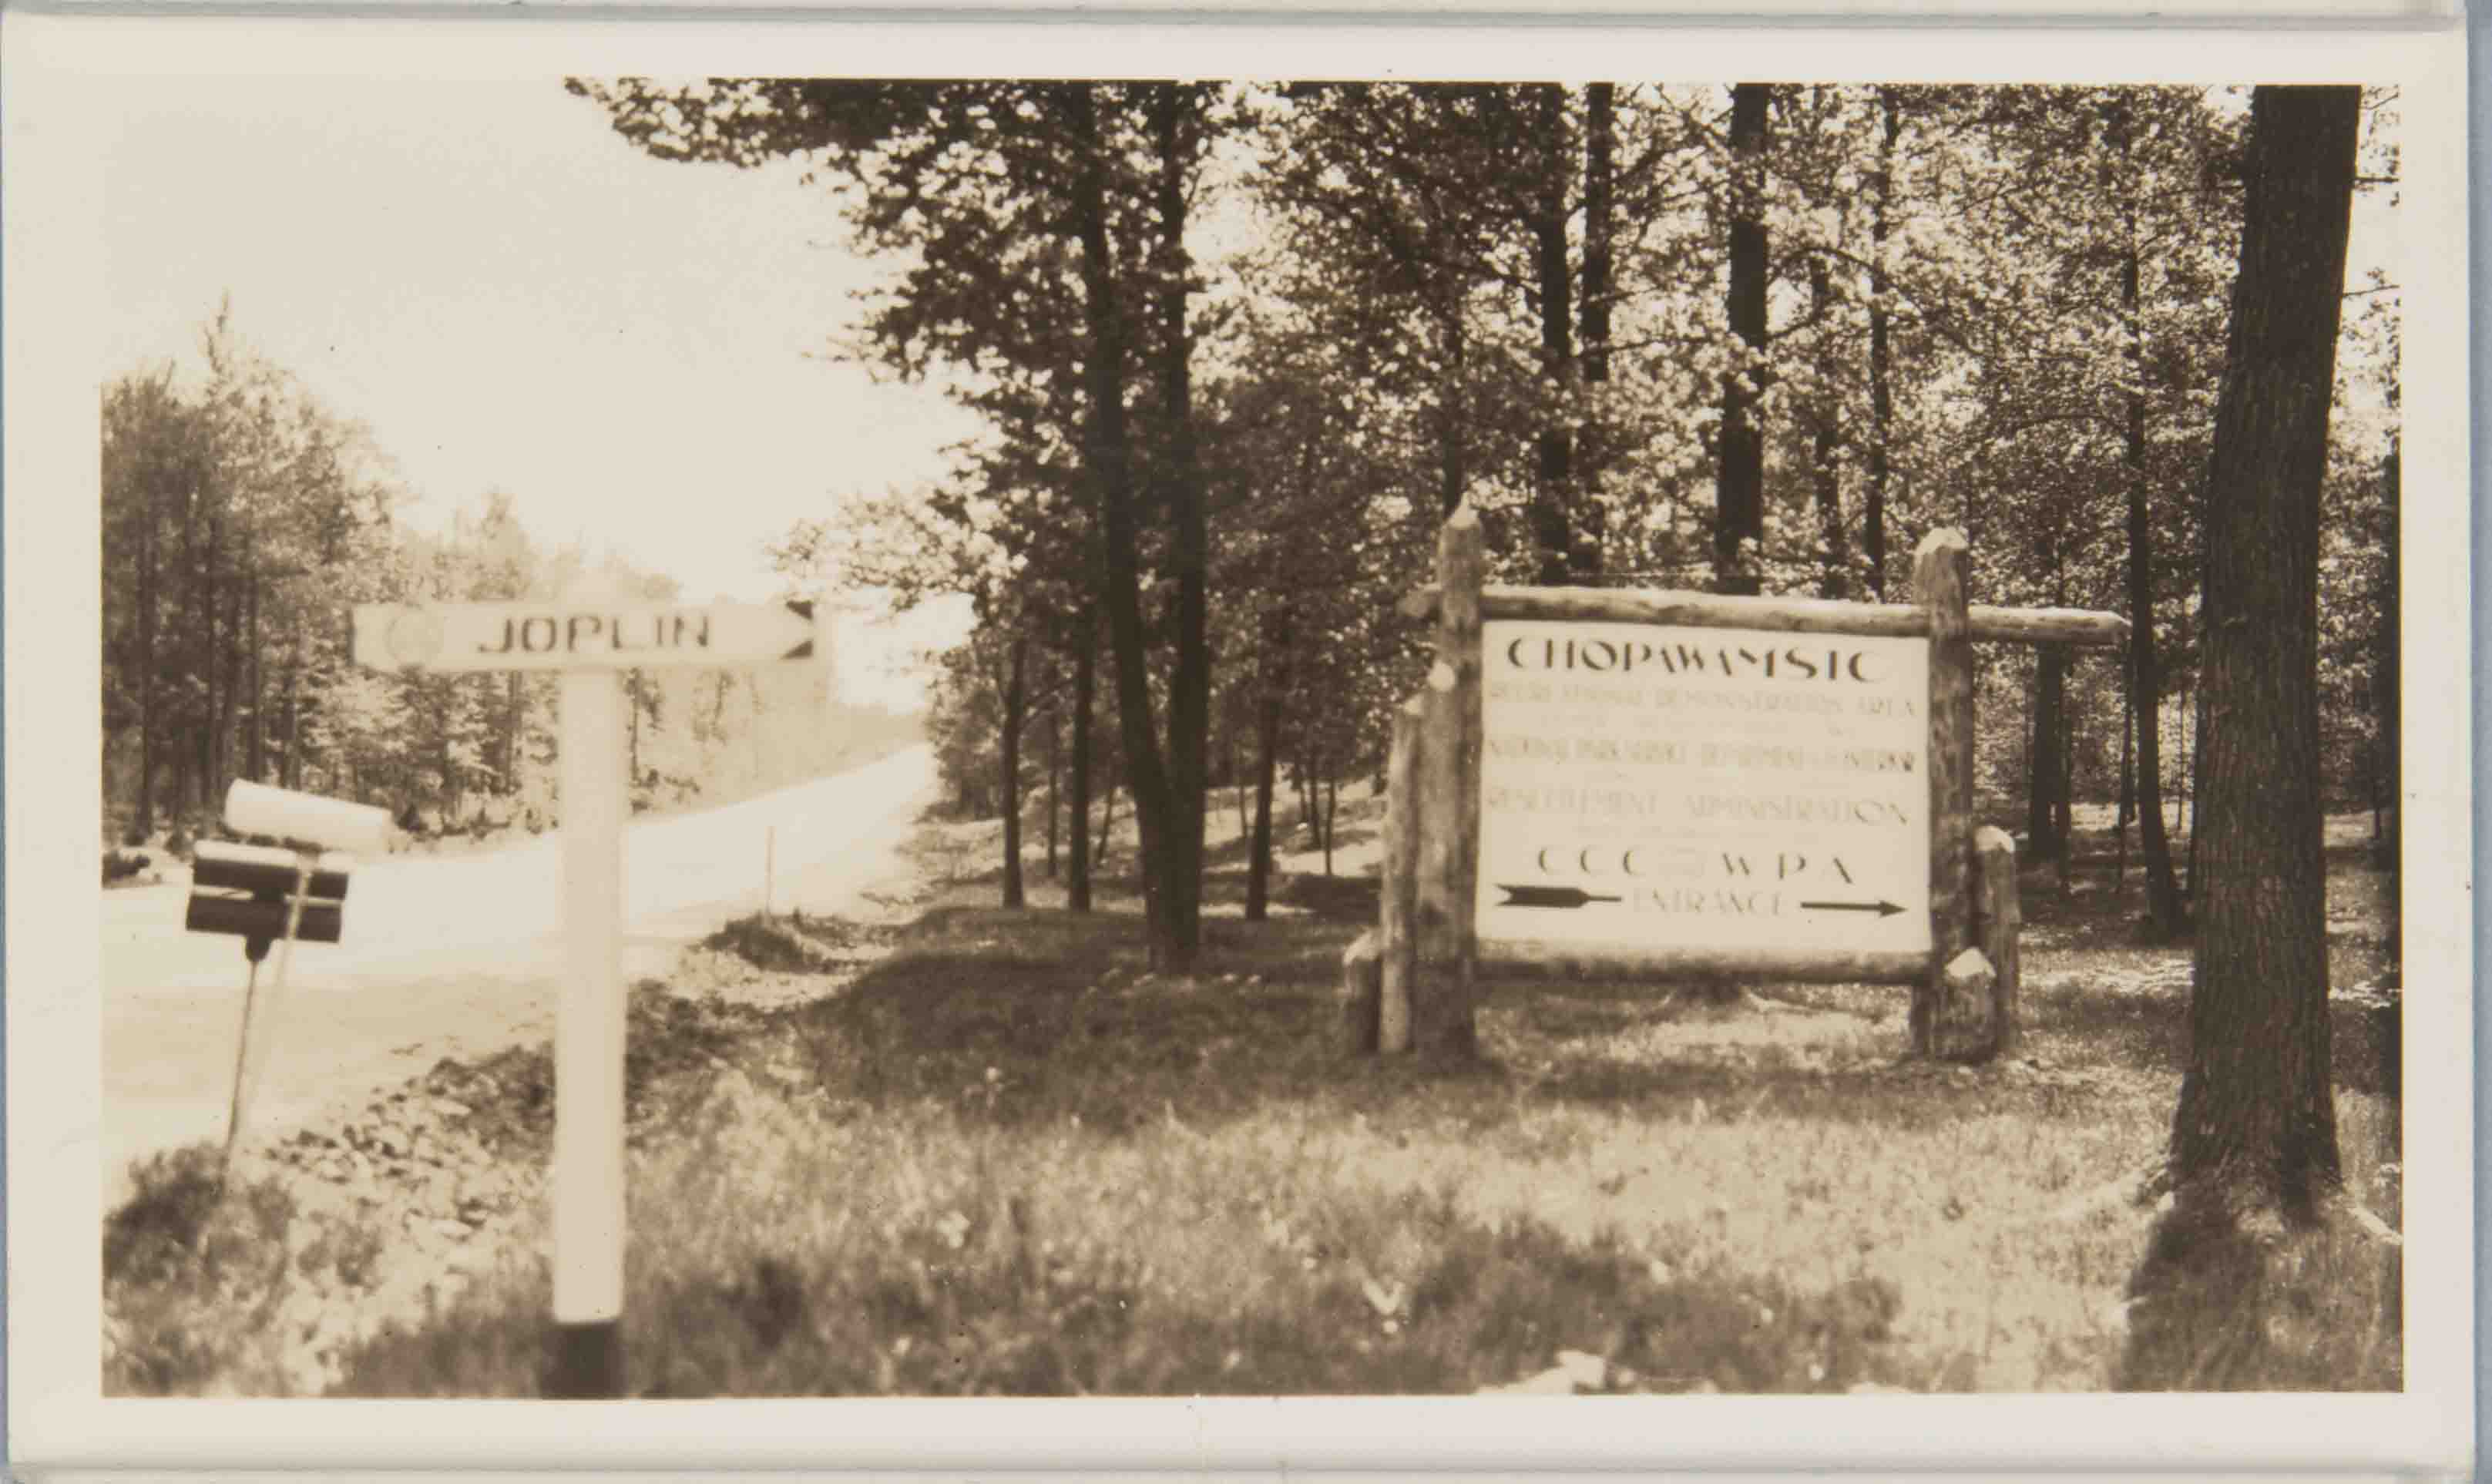 An original 1930's sign for Chopawamsic National Recreational Demonstration Area